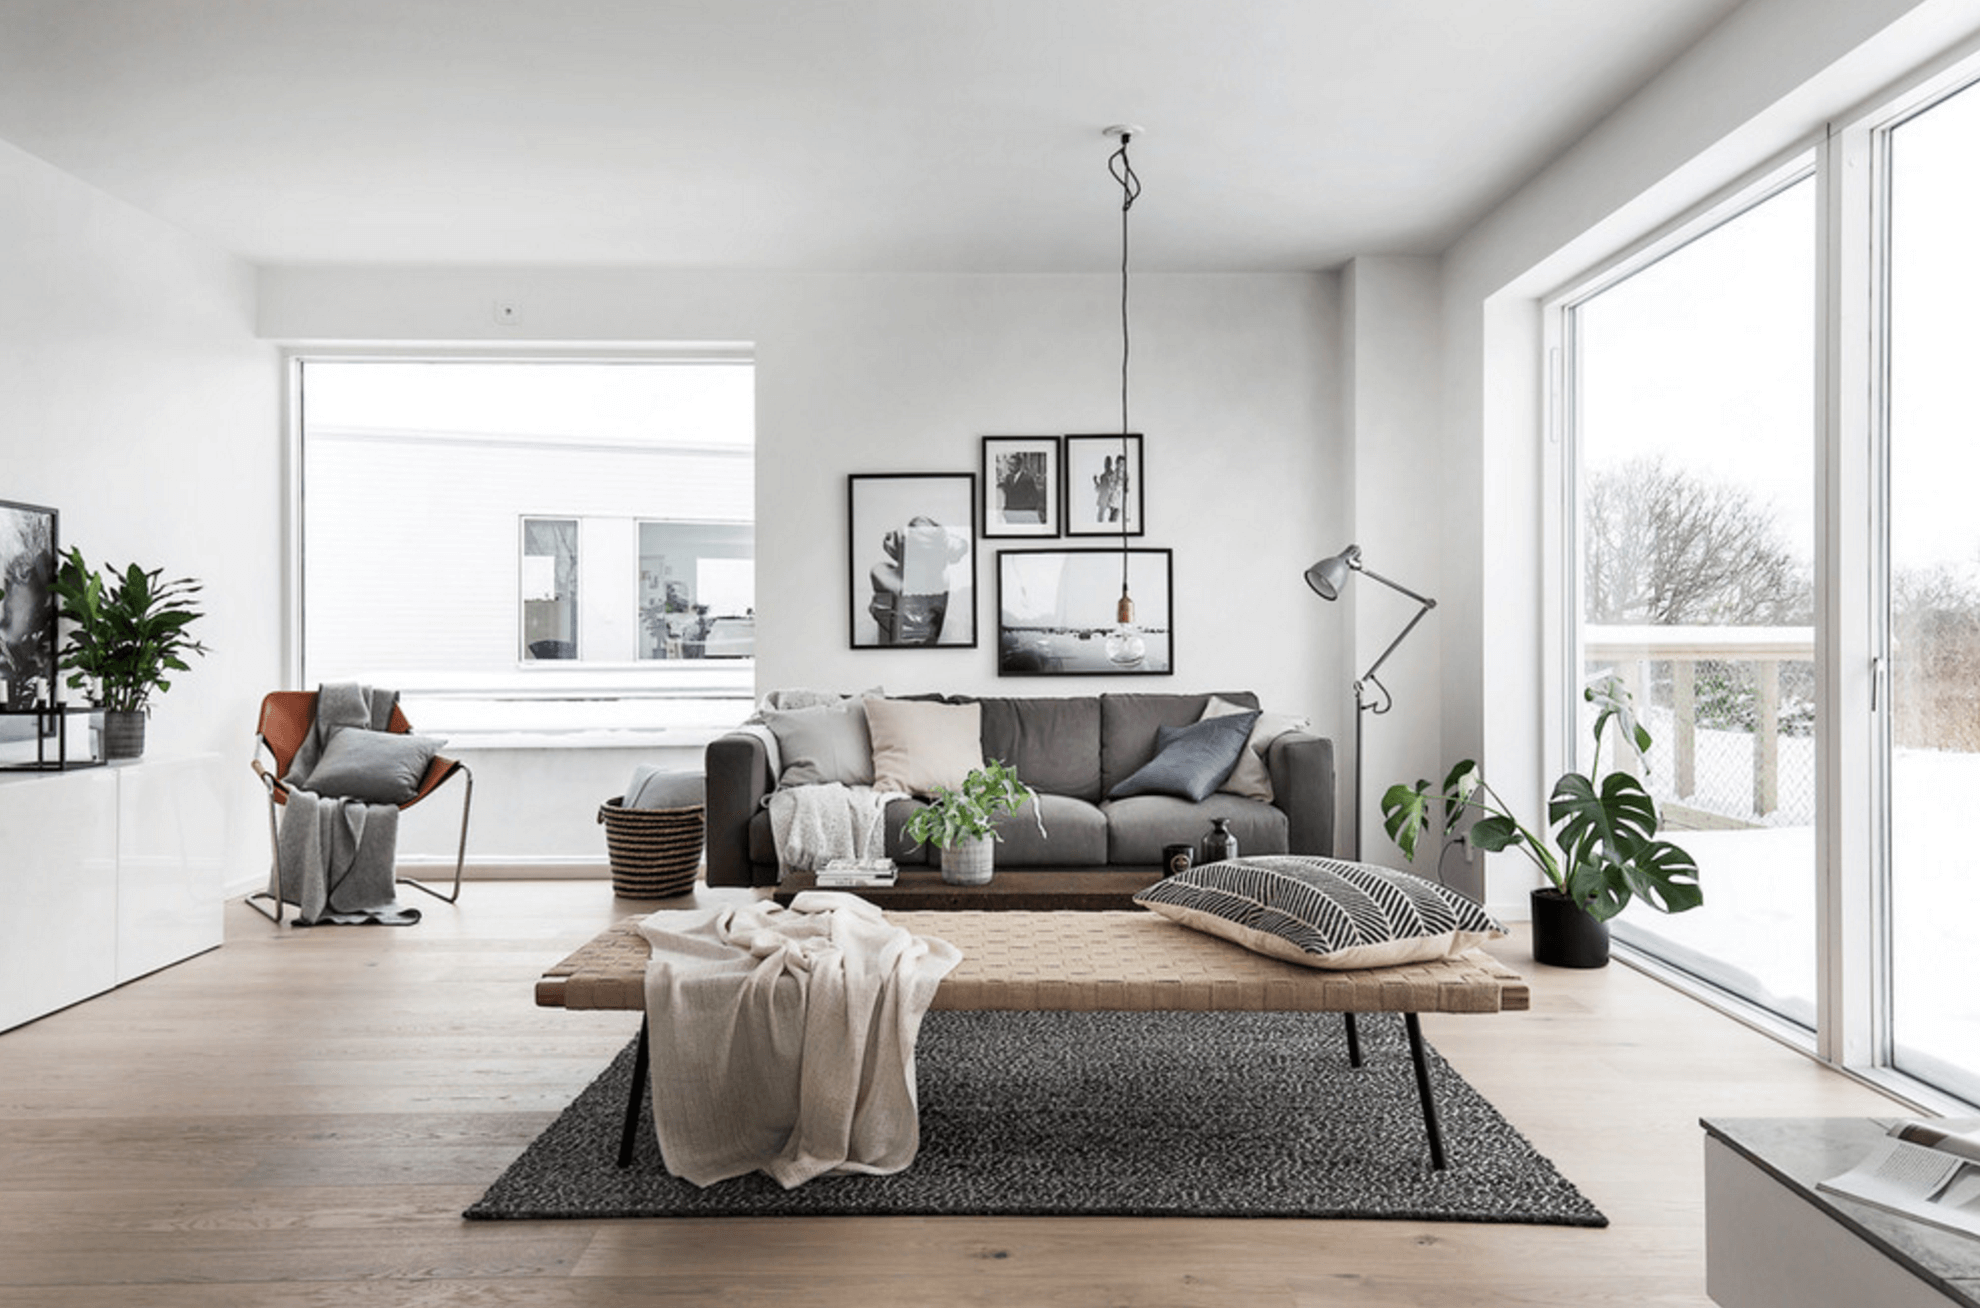 Online interior design in 4 easy steps - Moodfit